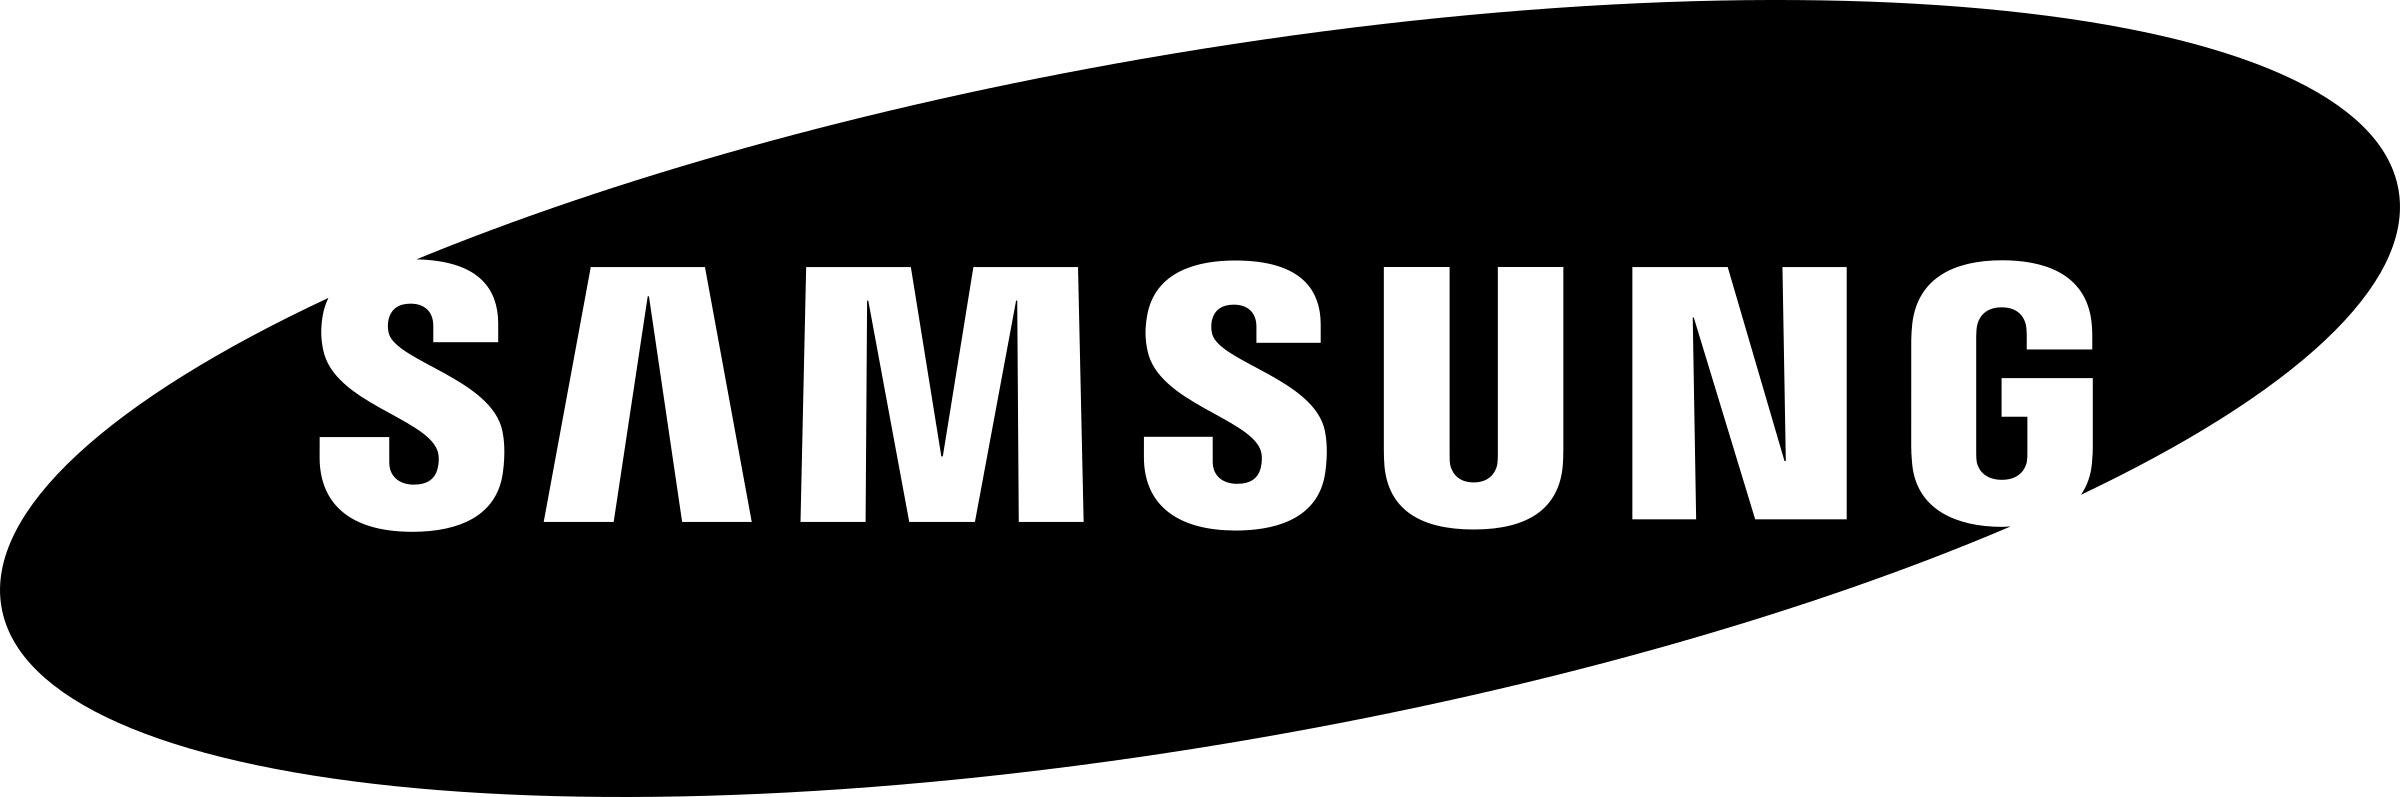 Samsung White Logo - Samsung Black And White Logo